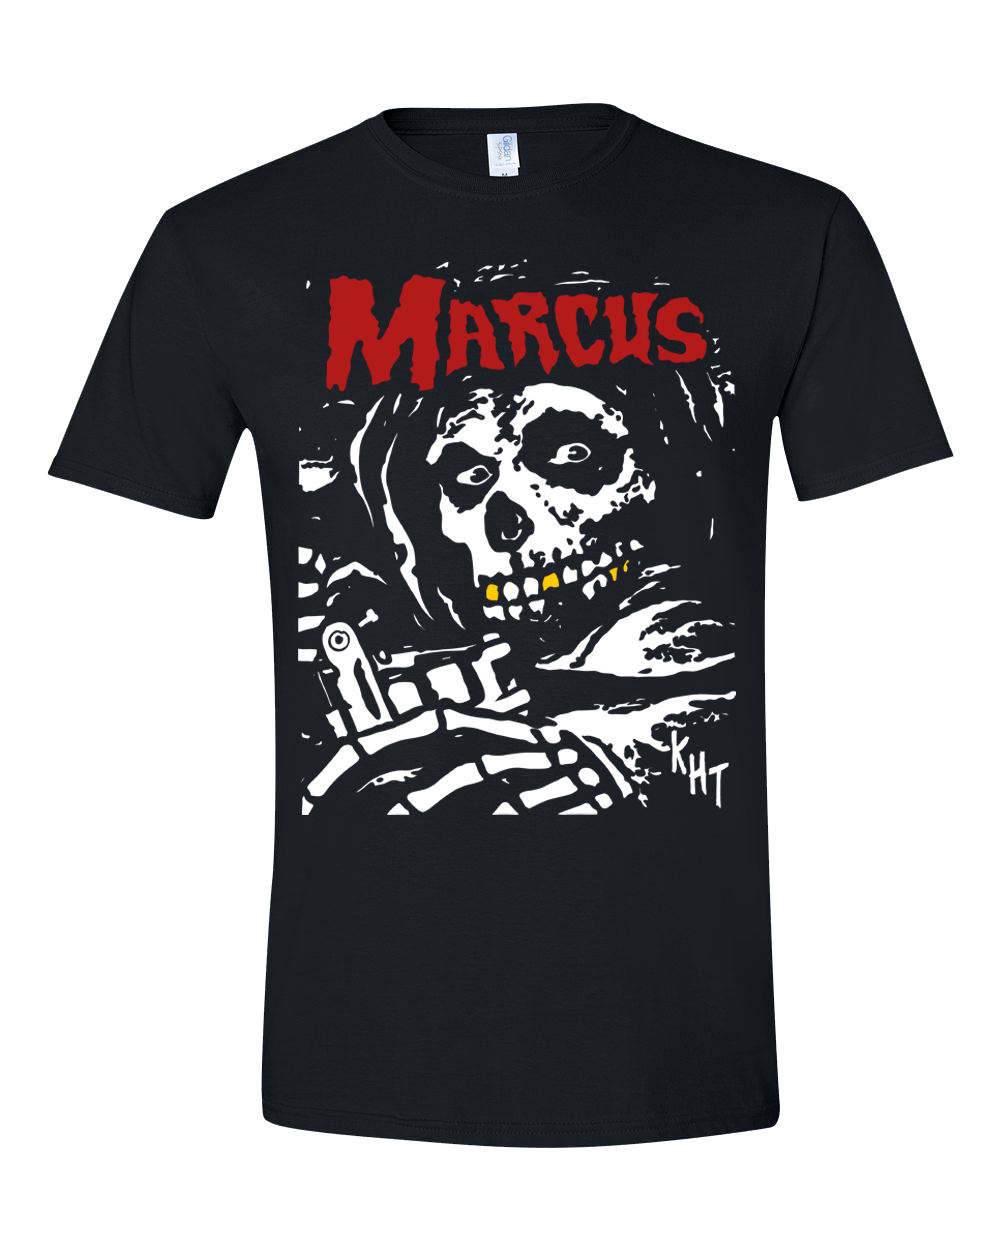 KHT “Marcus” Unisex T-Shirt